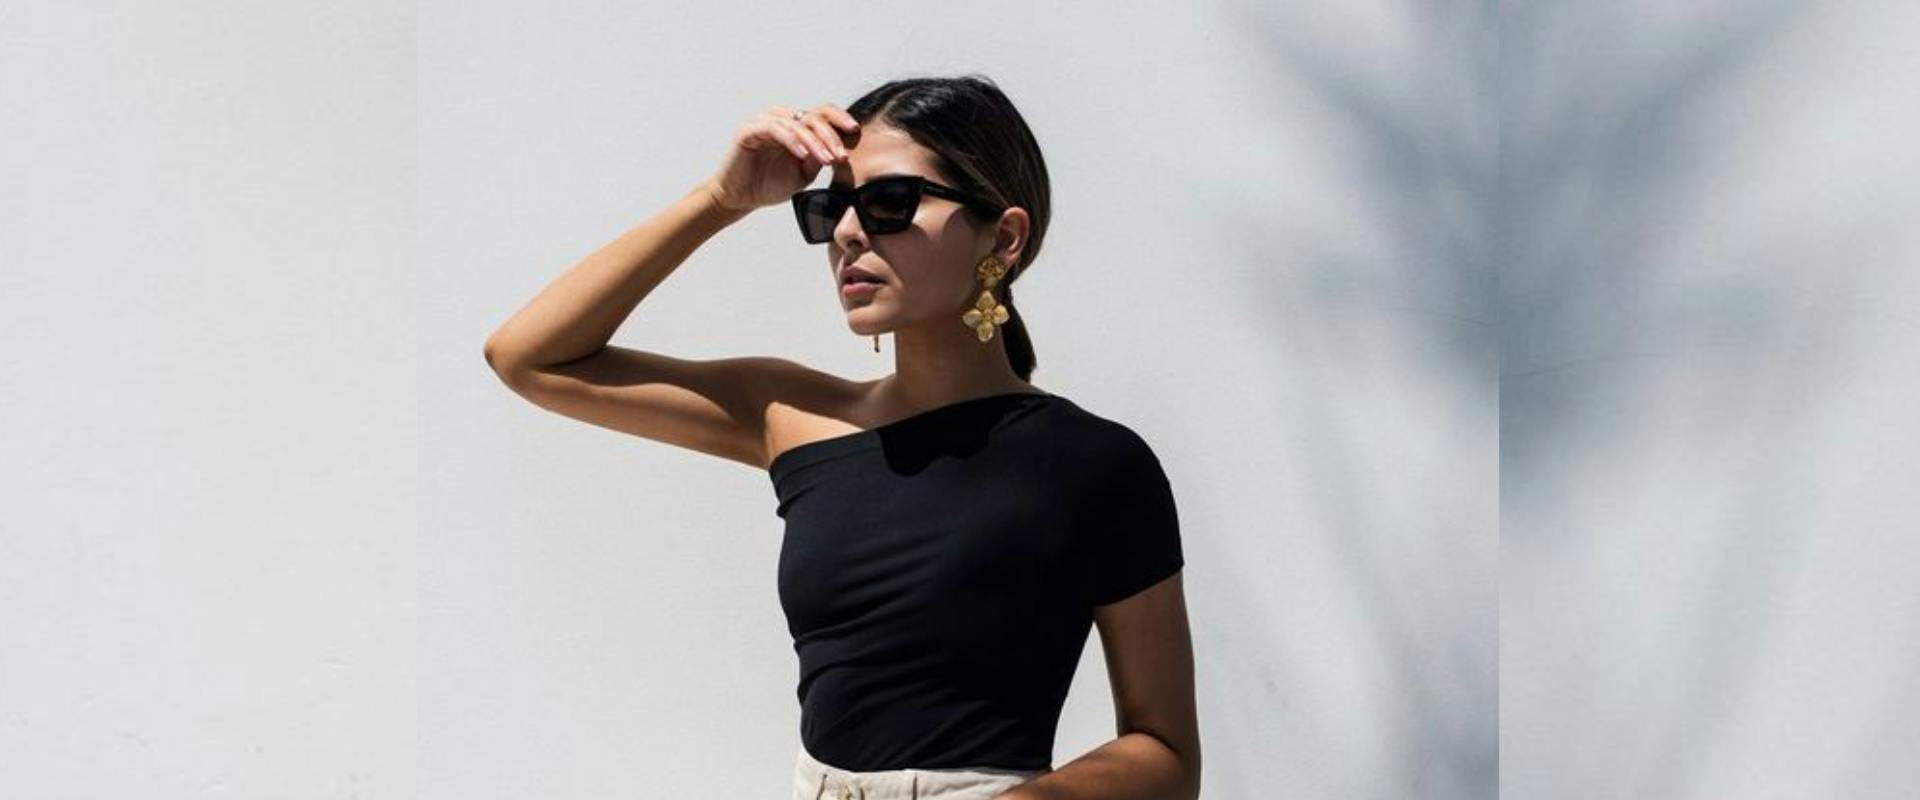 person human sunglasses accessories accessory clothing apparel female